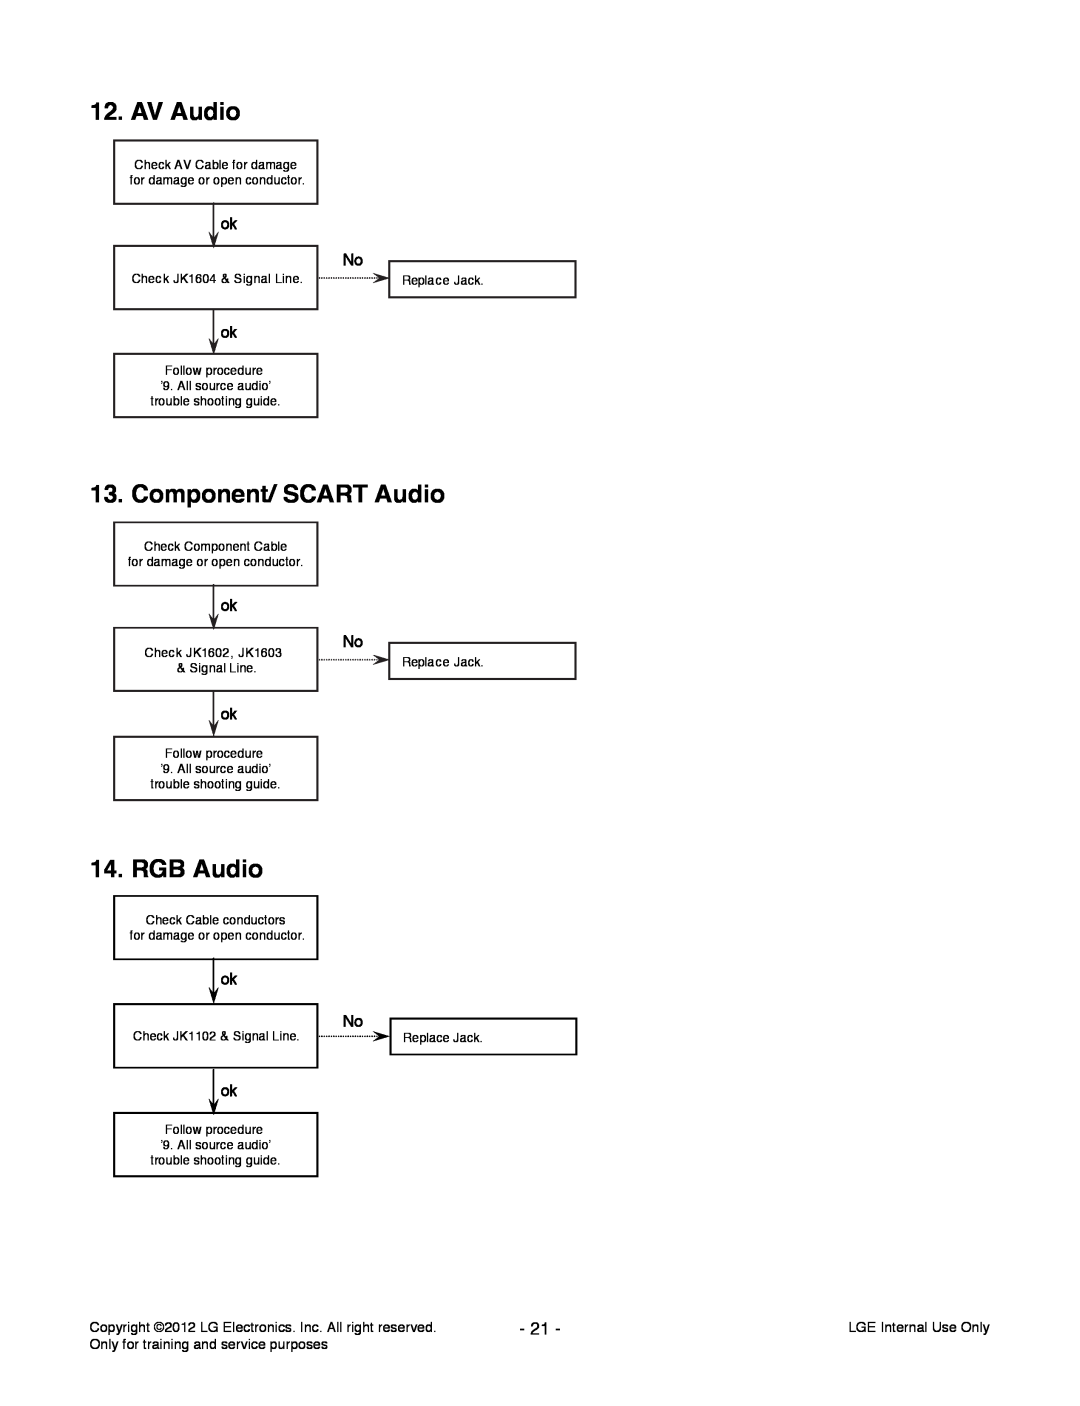 LG Electronics 42CS669C-ZD service manual AV Audio, Component/ SCART Audio, RGB Audio 